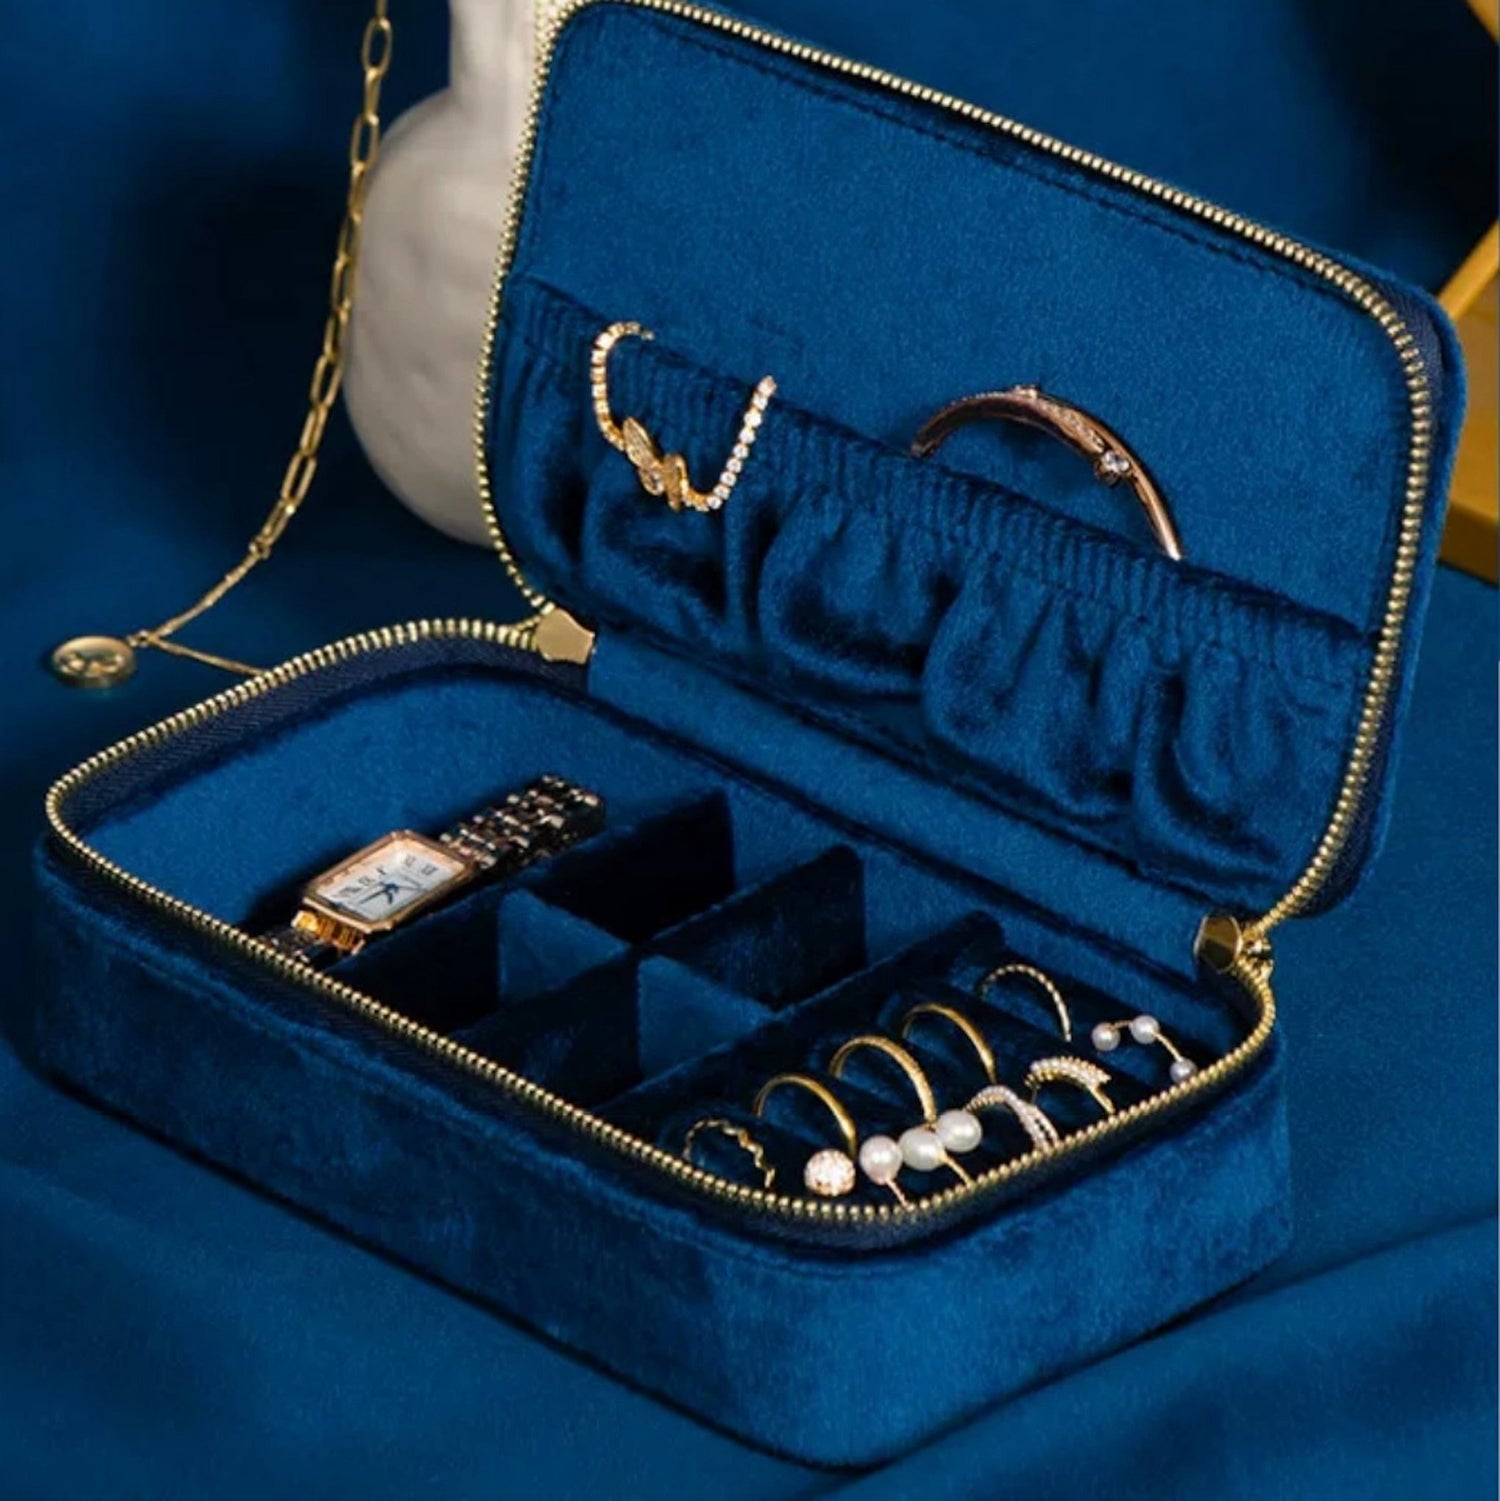 Vintage inspired velvet travel jewelry box-Sapphire blue-duel boxes